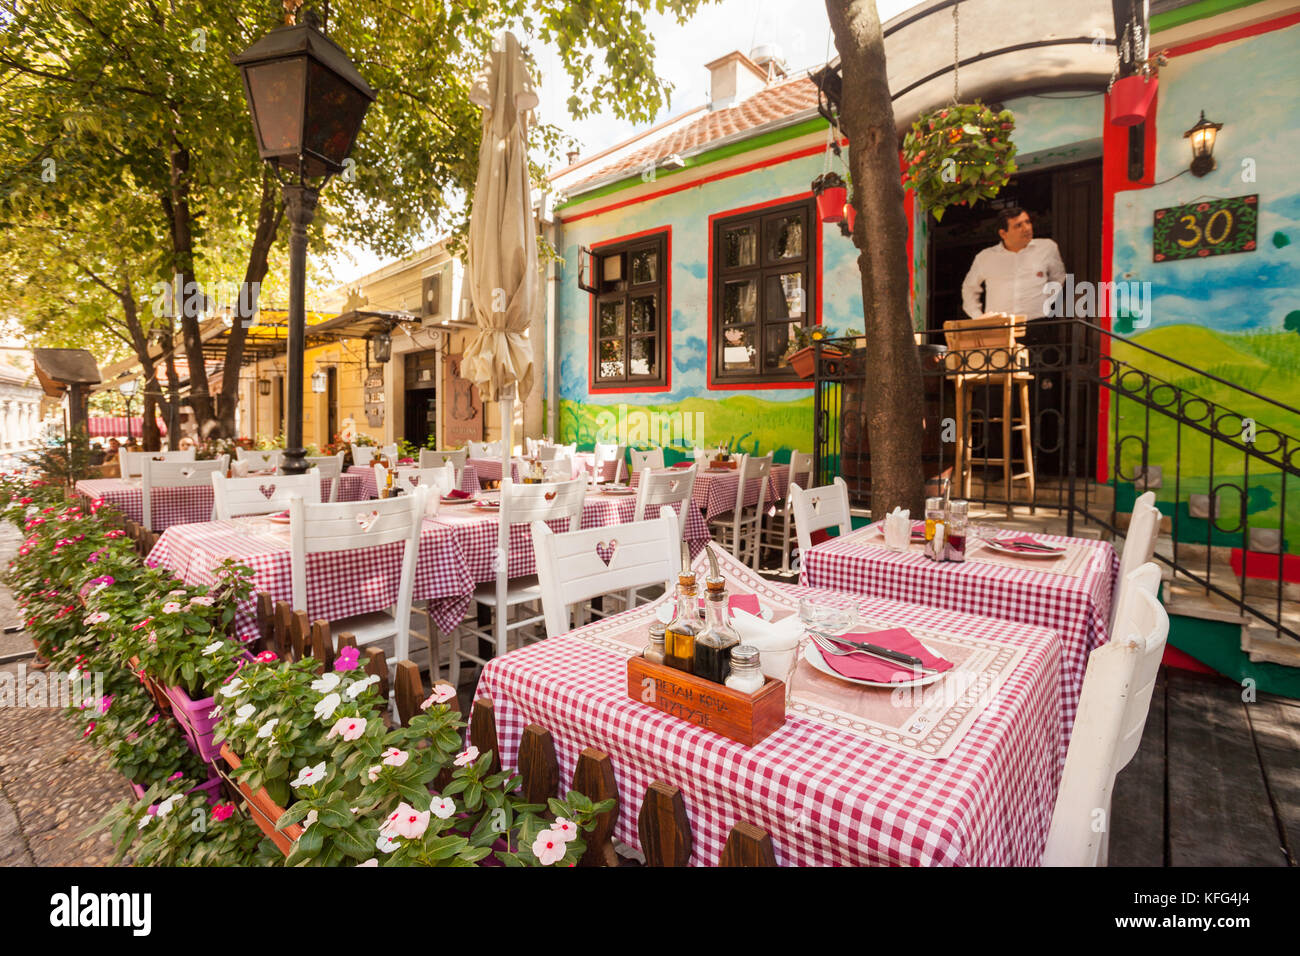 BELGRADE, Serbia - 4 Sept: Tourists enjoy the cafes of Skandarlija (Skandarska), Belgrade's bohemian quarter, on 4 Sept 2017. Stock Photo